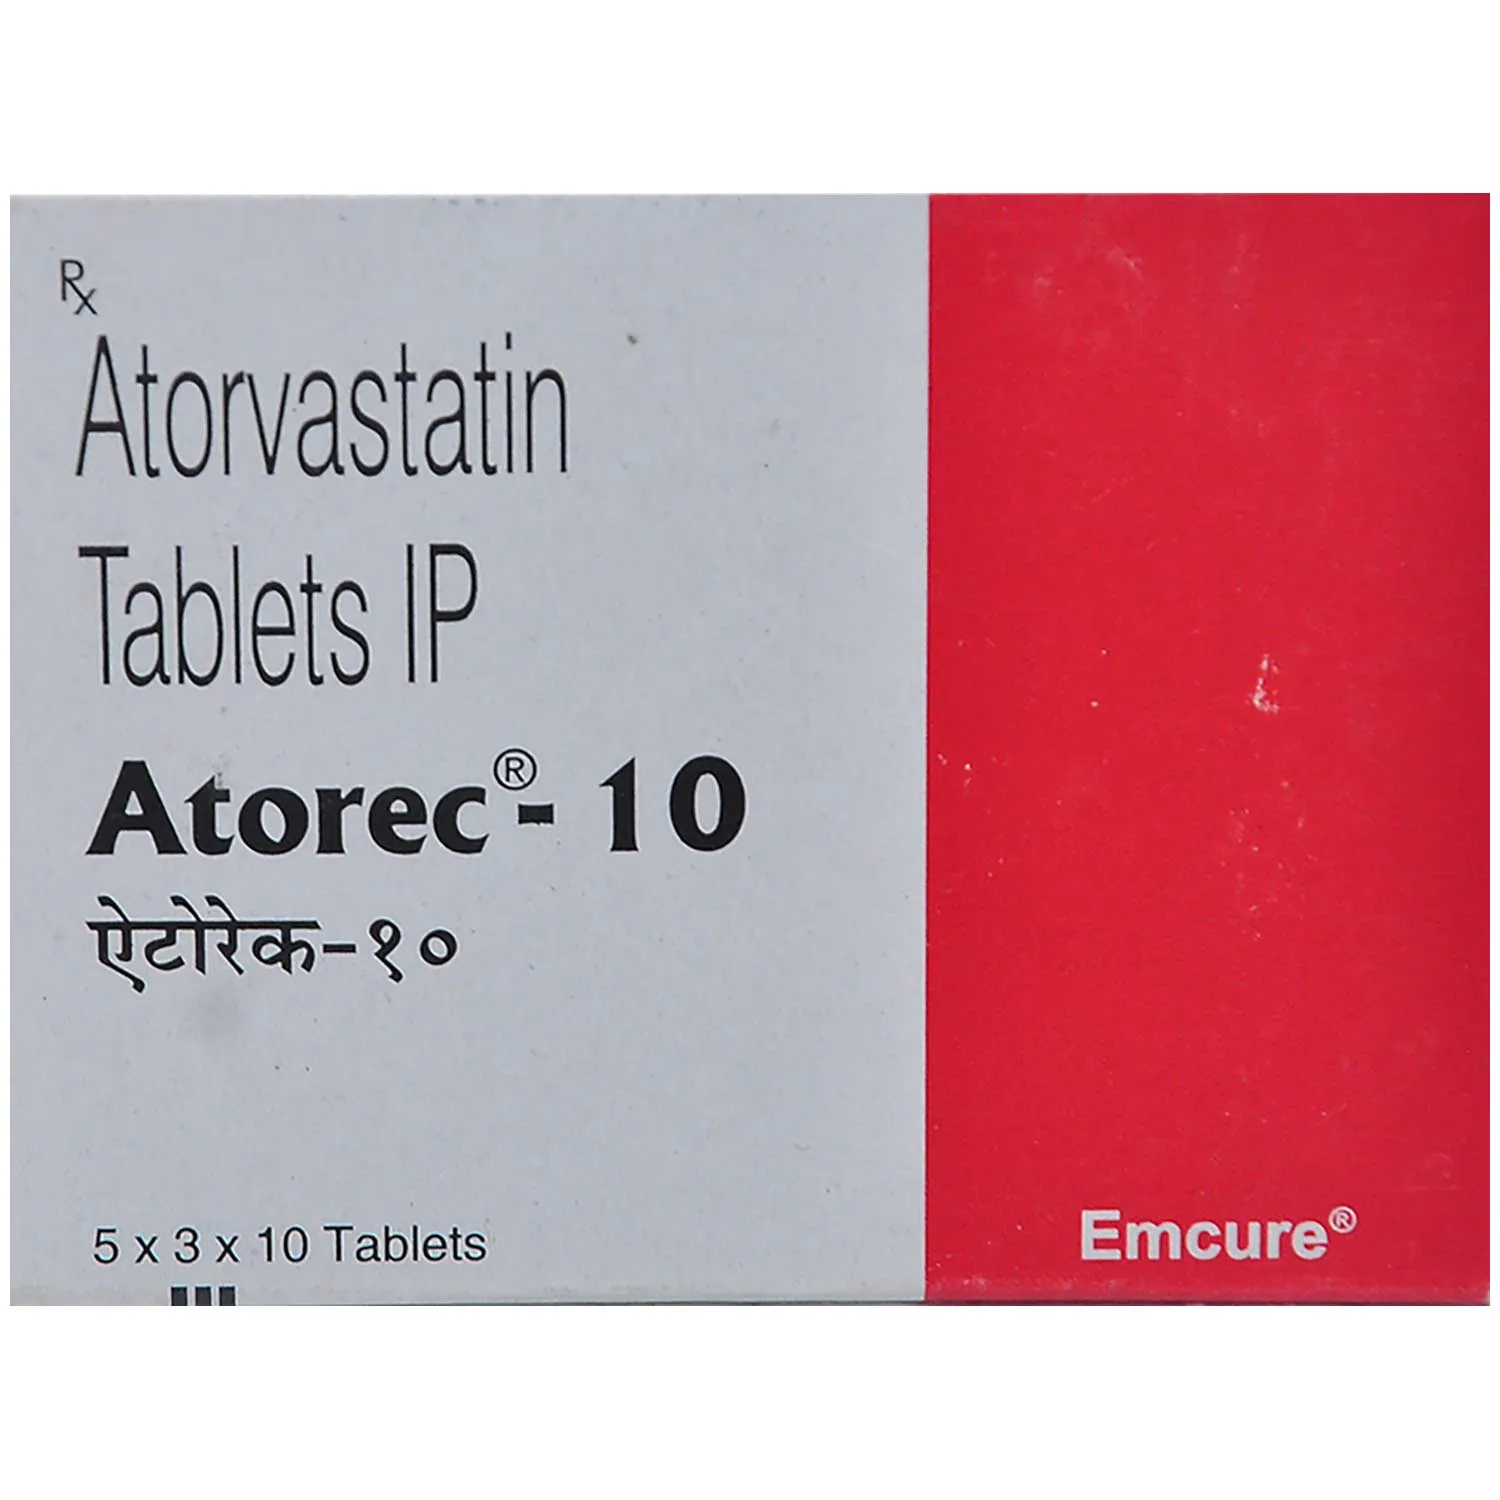 Atorec 10 Tablet